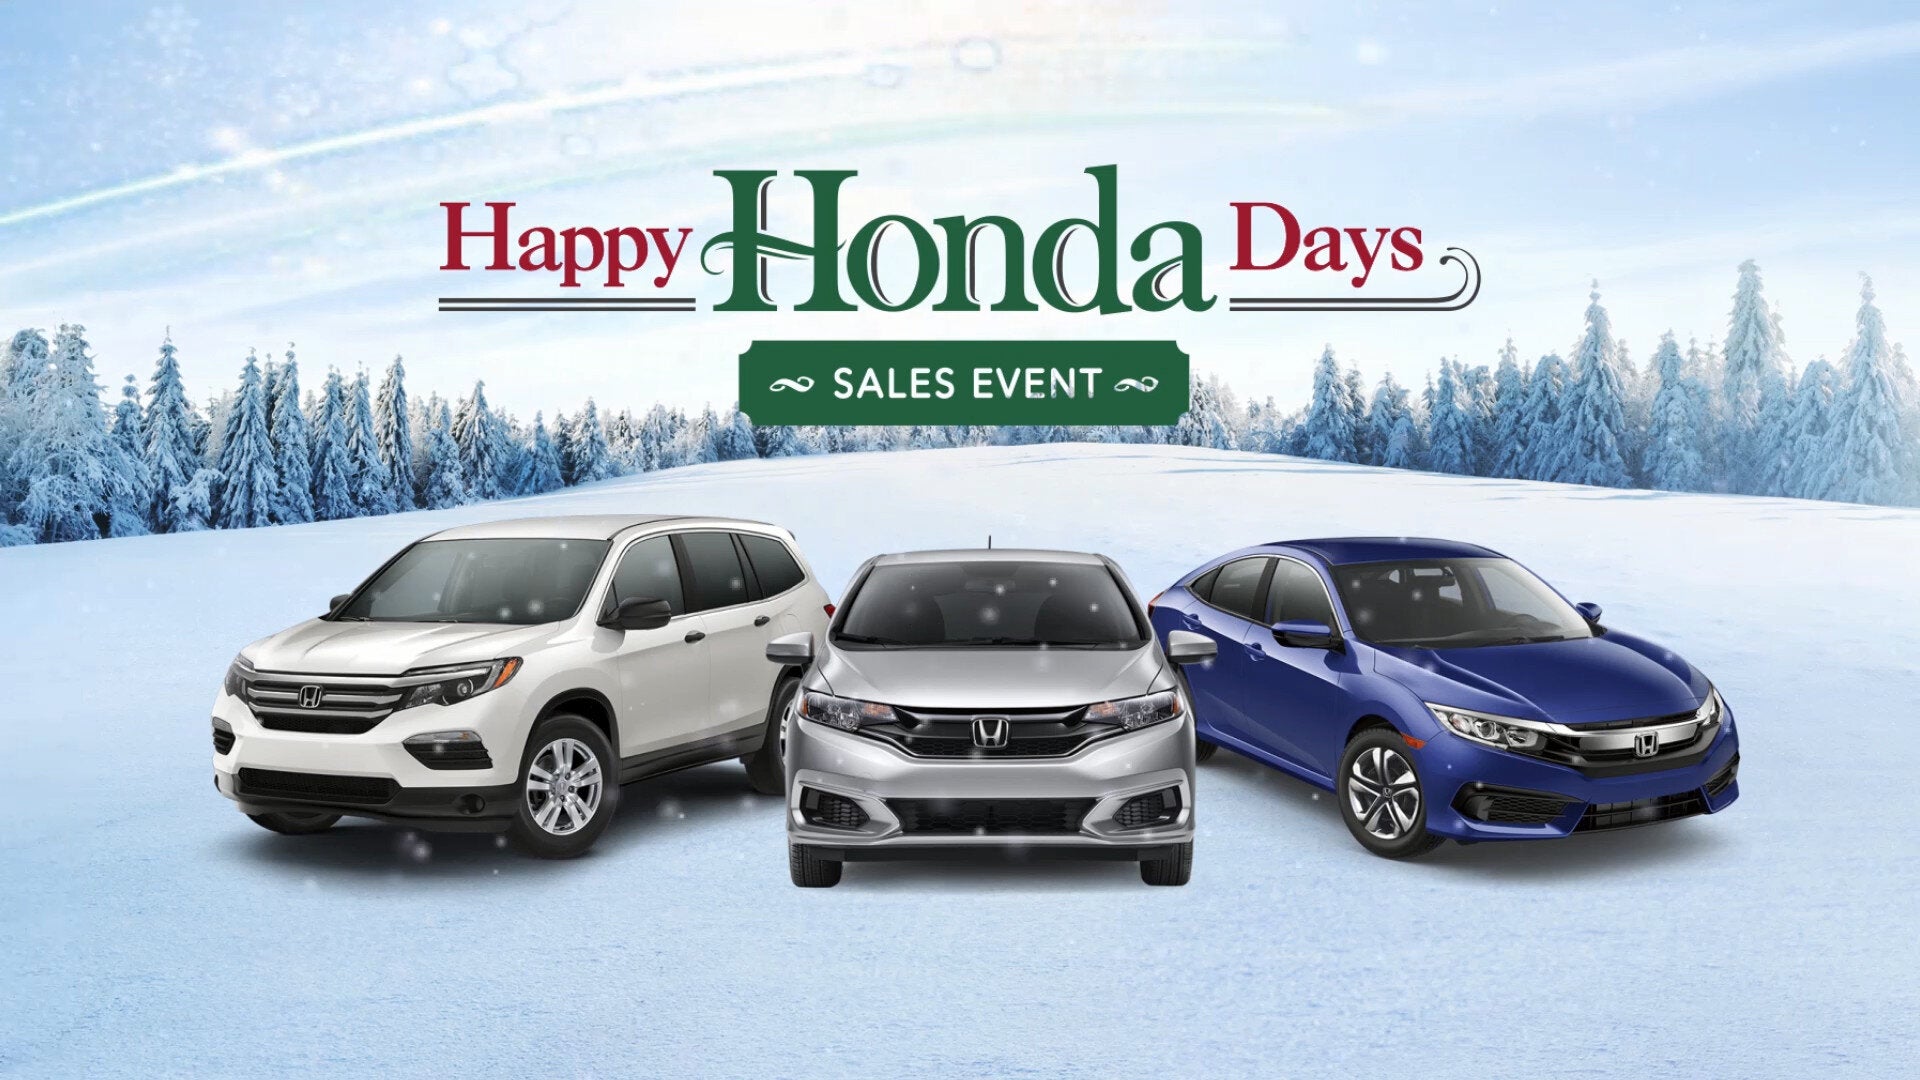 Honda Days Sales Event